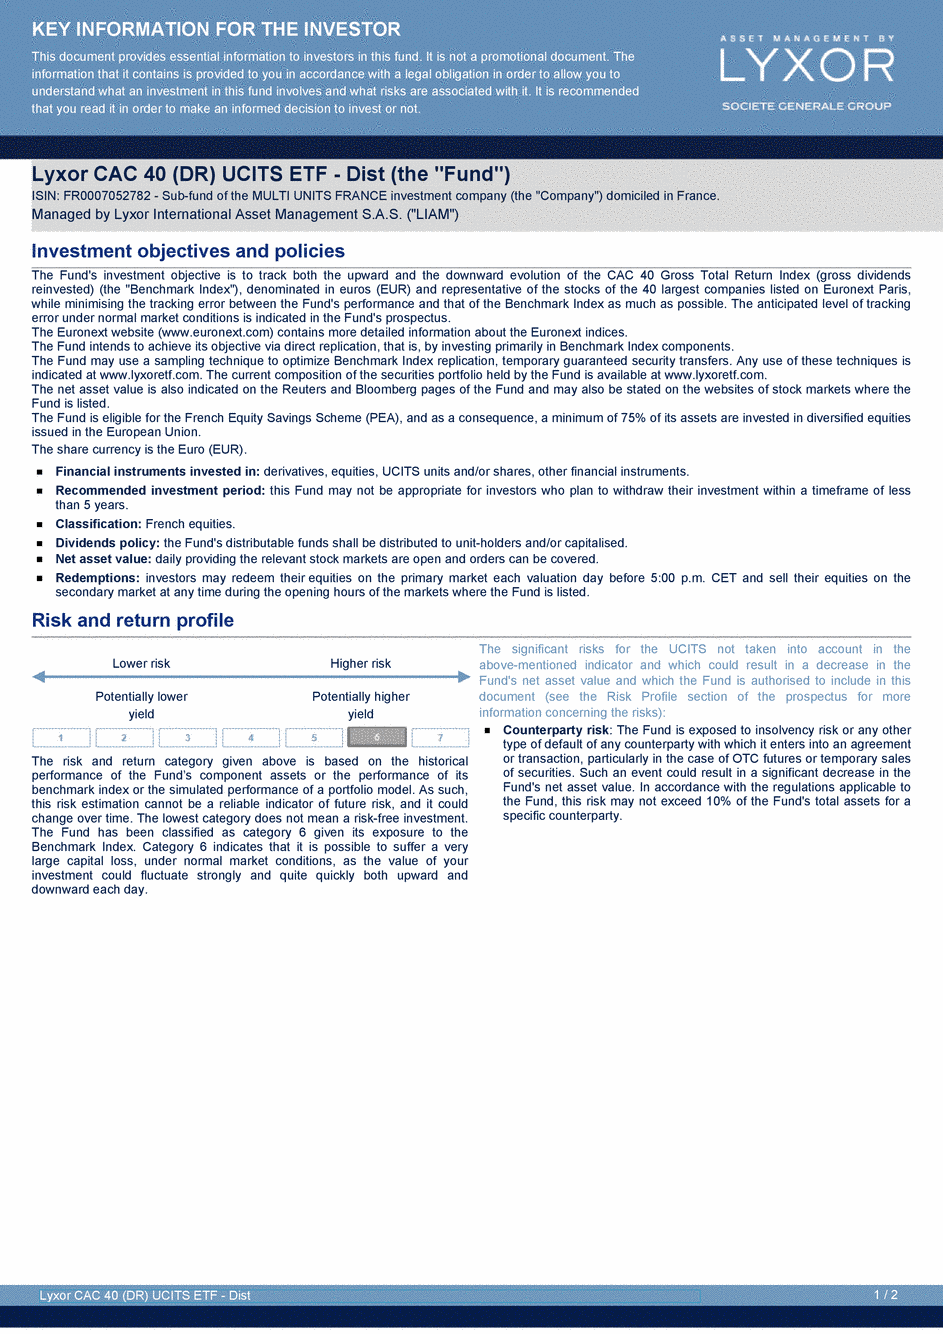 DICI Lyxor CAC 40 (DR) UCITS ETF - Dist - 05/09/2019 - Anglais